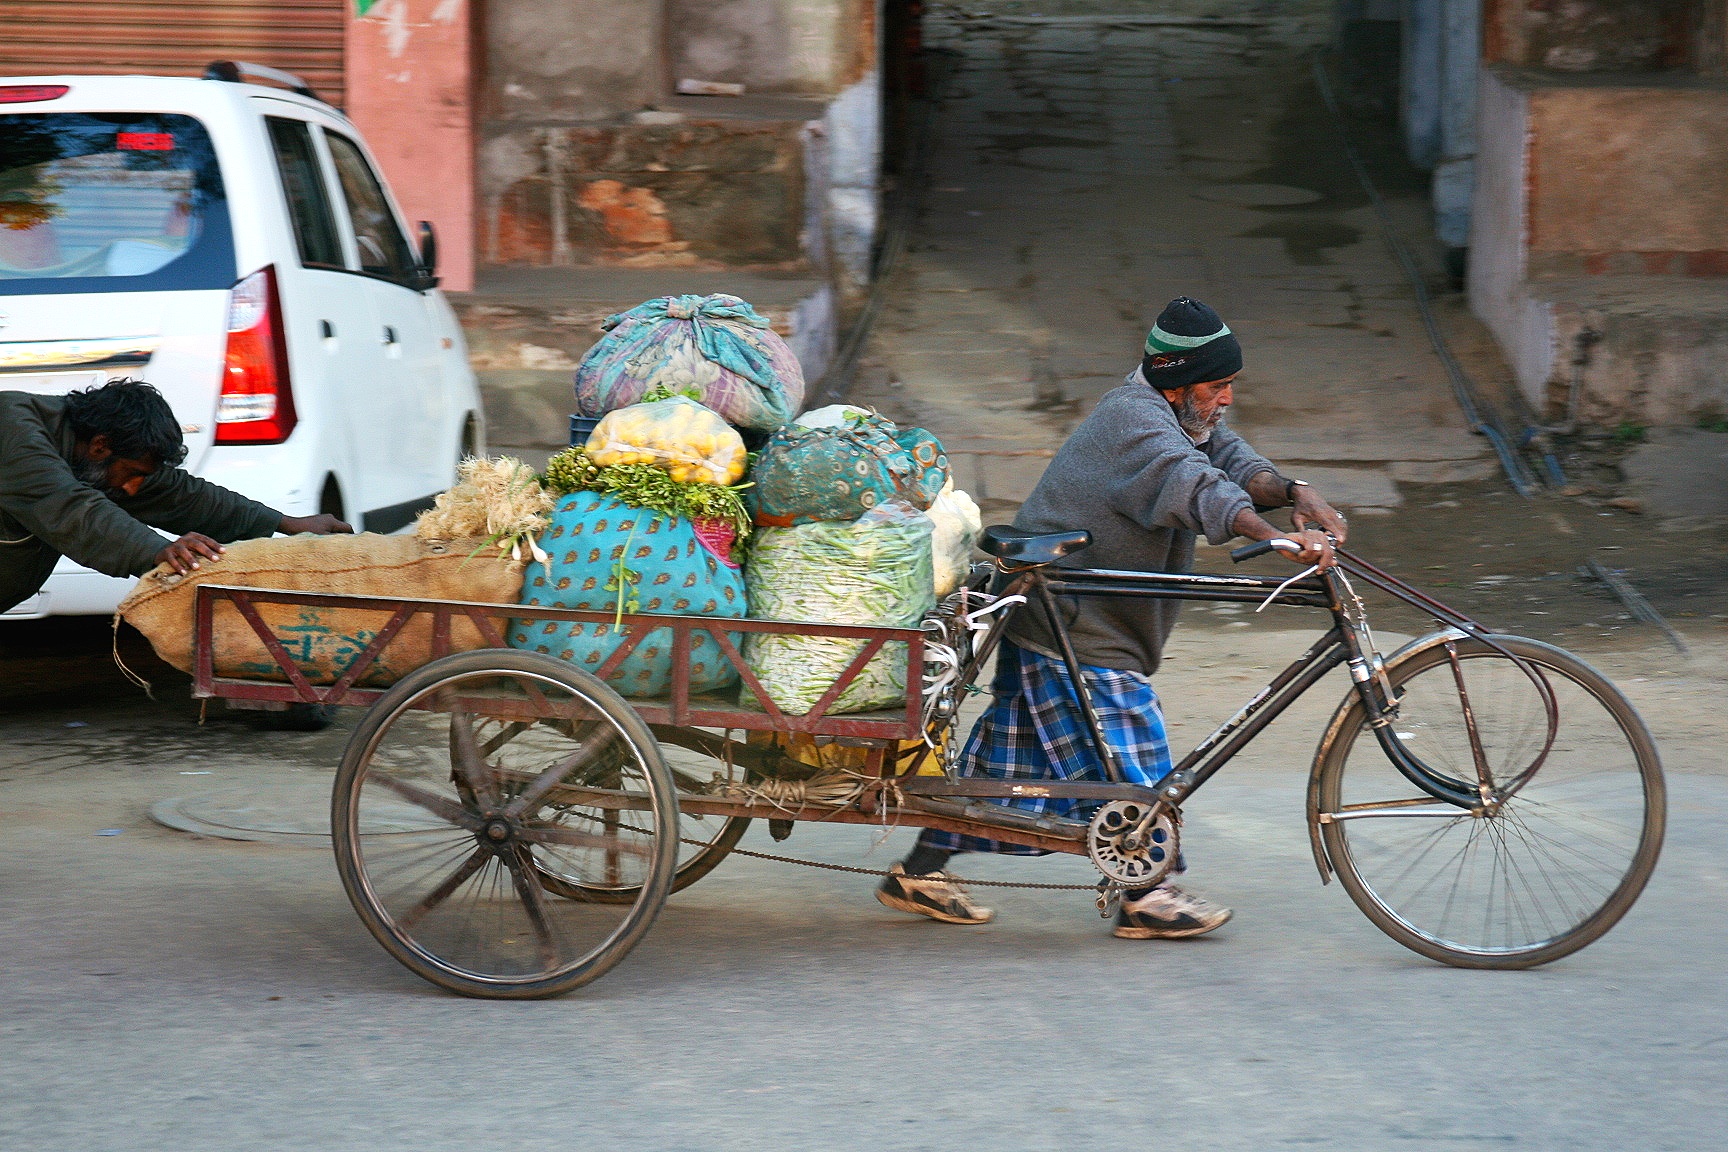 Transporting goods to market, Jairpur, India